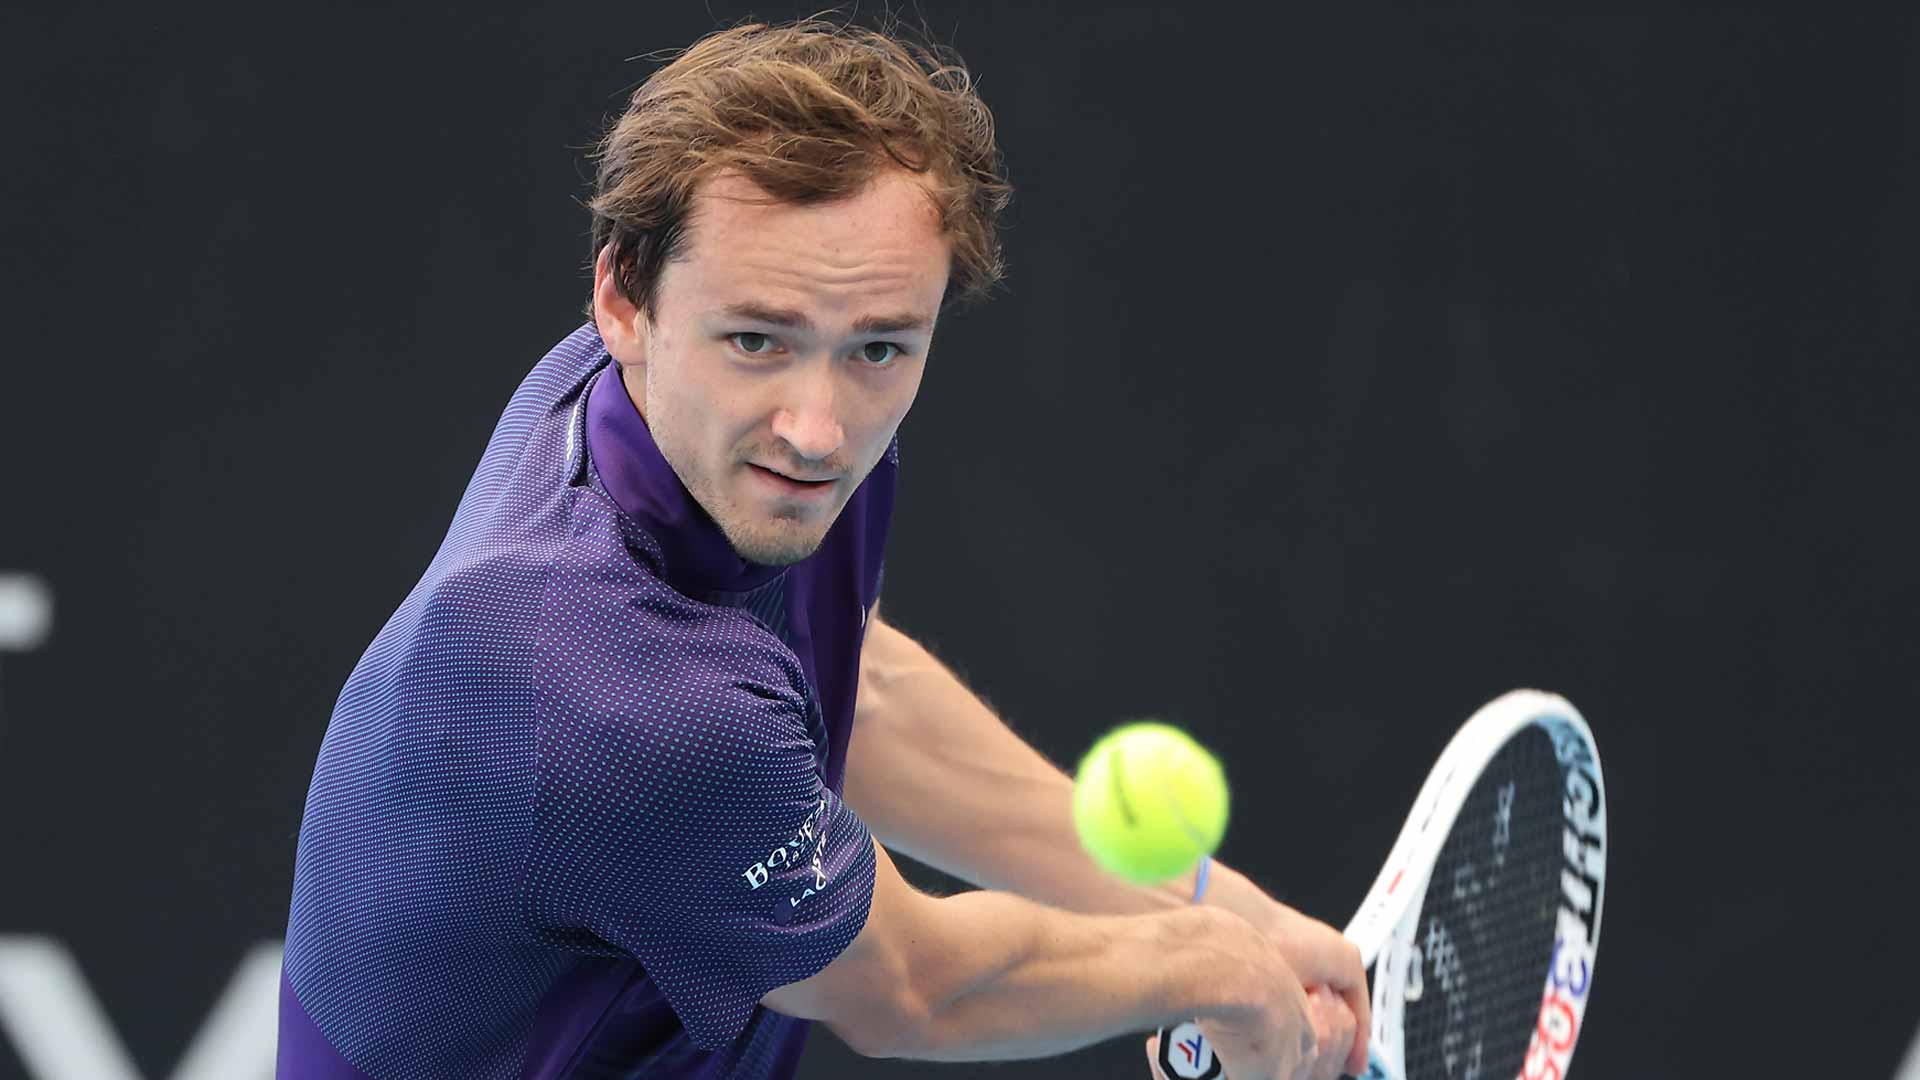 Daniil Medvedev defeats Karen Khachanov in straight sets on Friday in Adelaide.